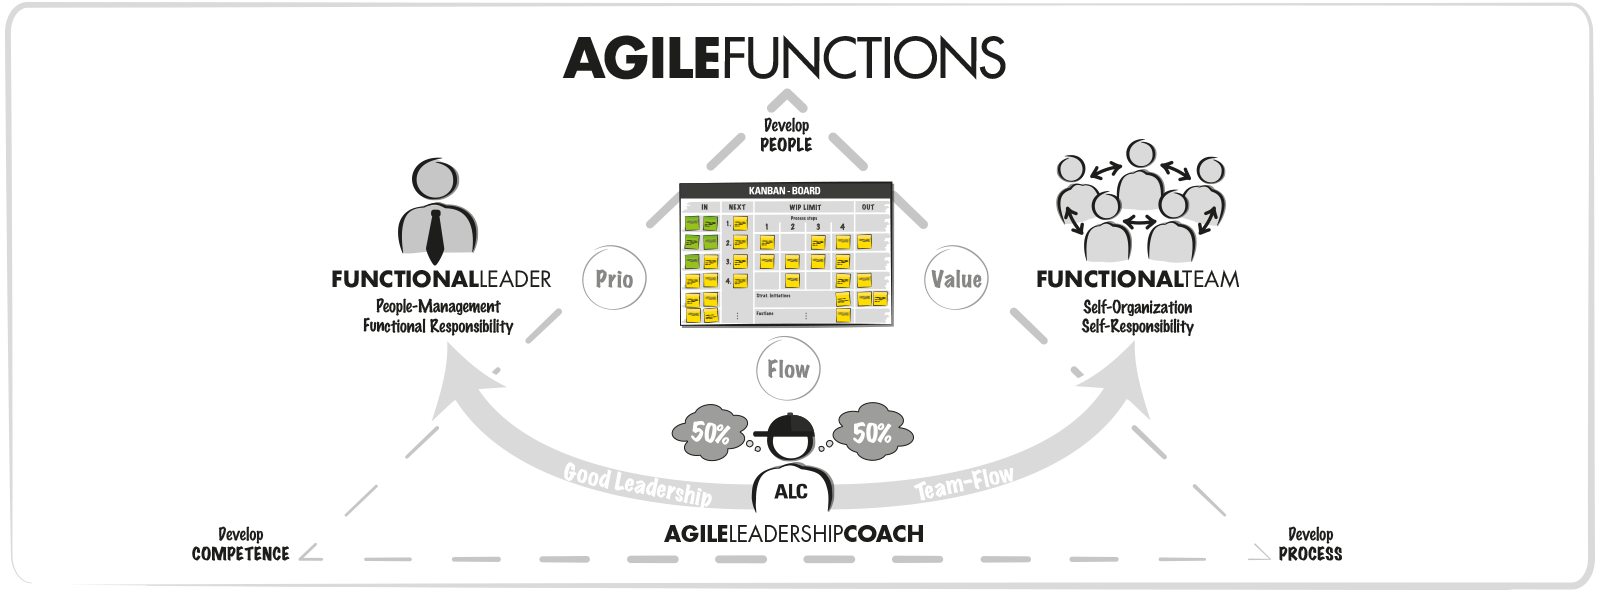 Agile Fachbereiche - Das Agile Unternehmen